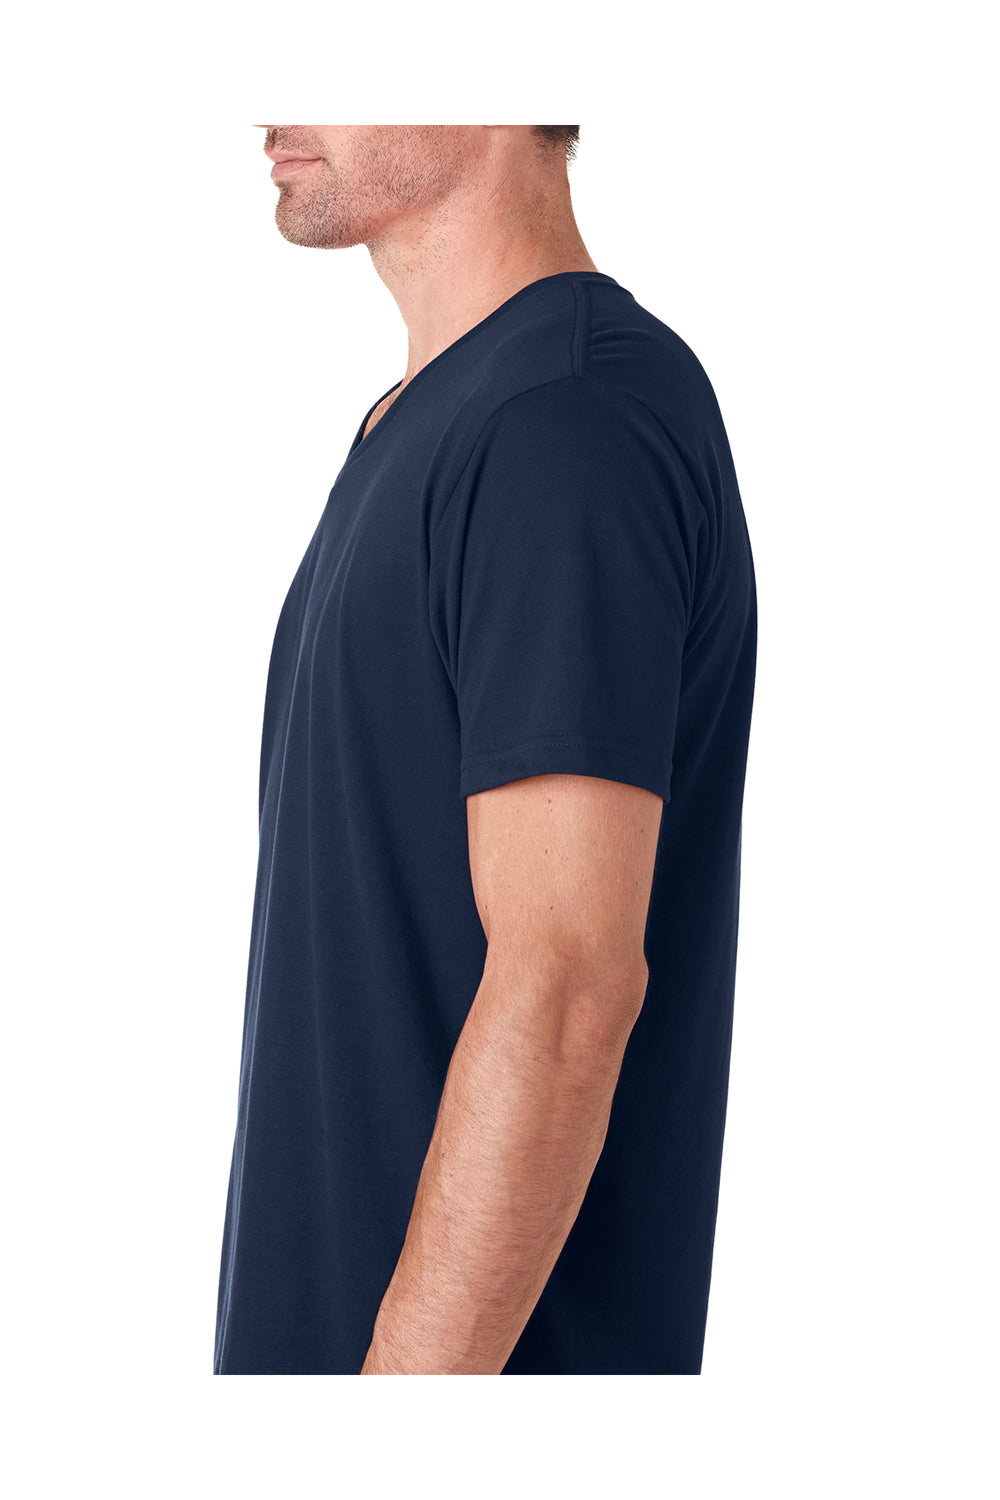 Next Level 6440 Mens Sueded Jersey Short Sleeve V-Neck T-Shirt Navy Blue Side